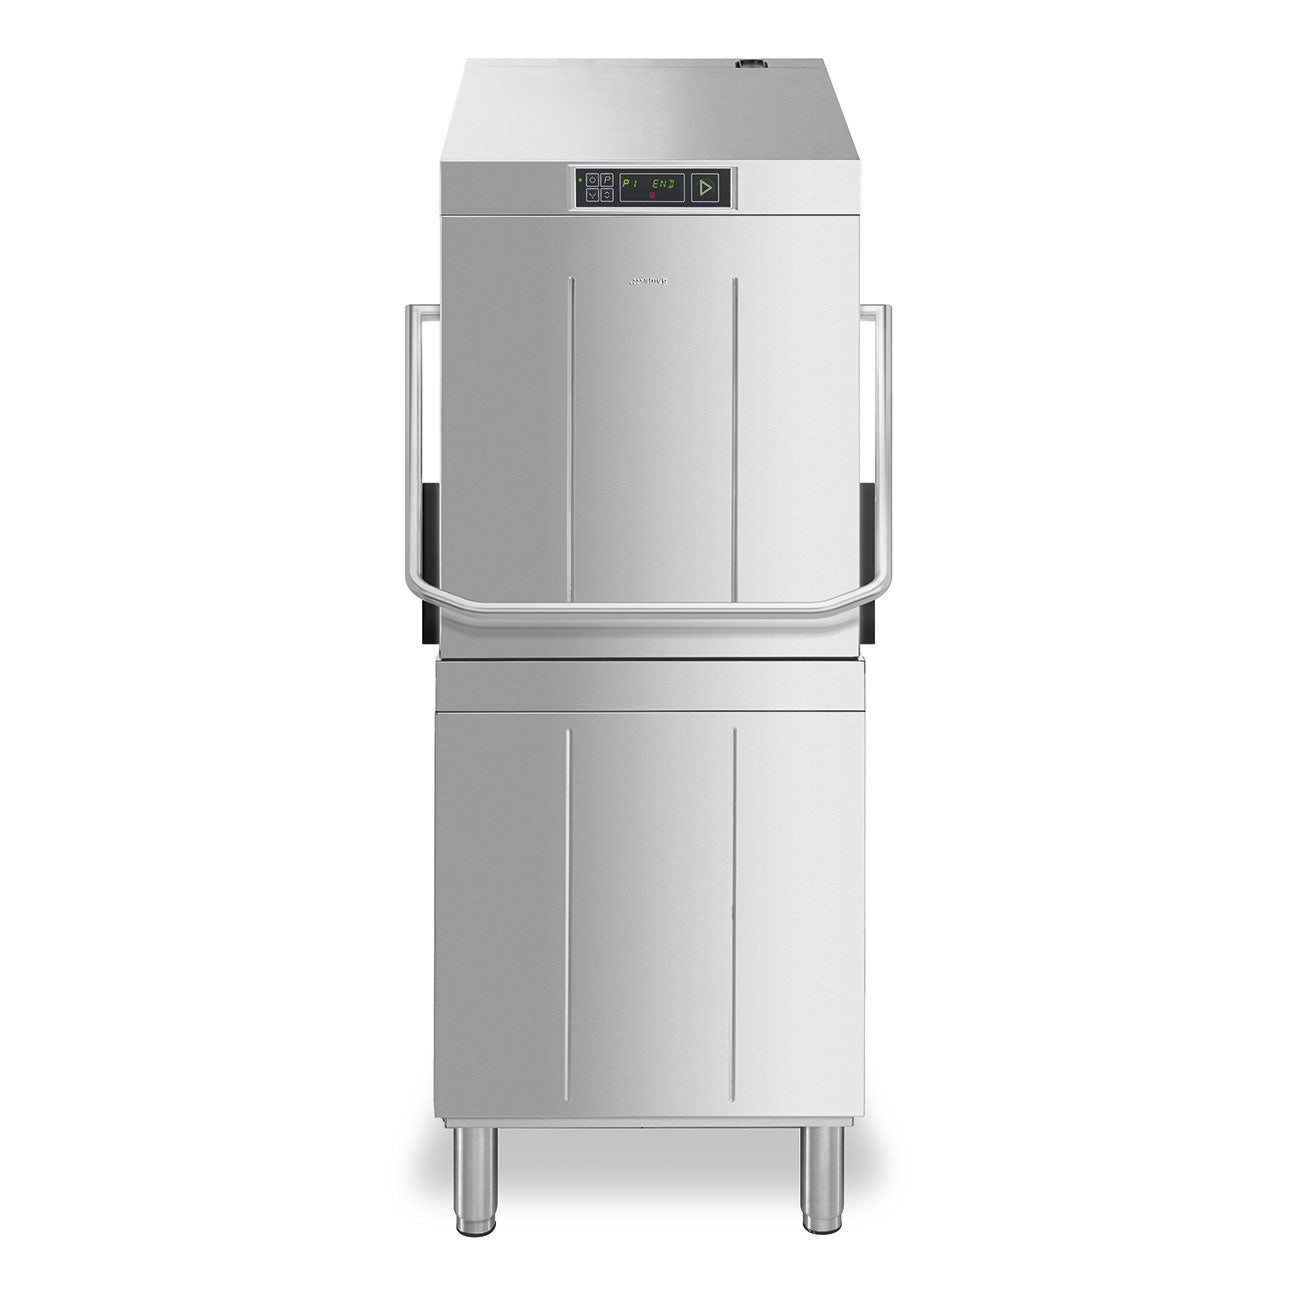 Smeg Topline range Hood Type Dishwasher with integral softener,  500x500 SPH515S